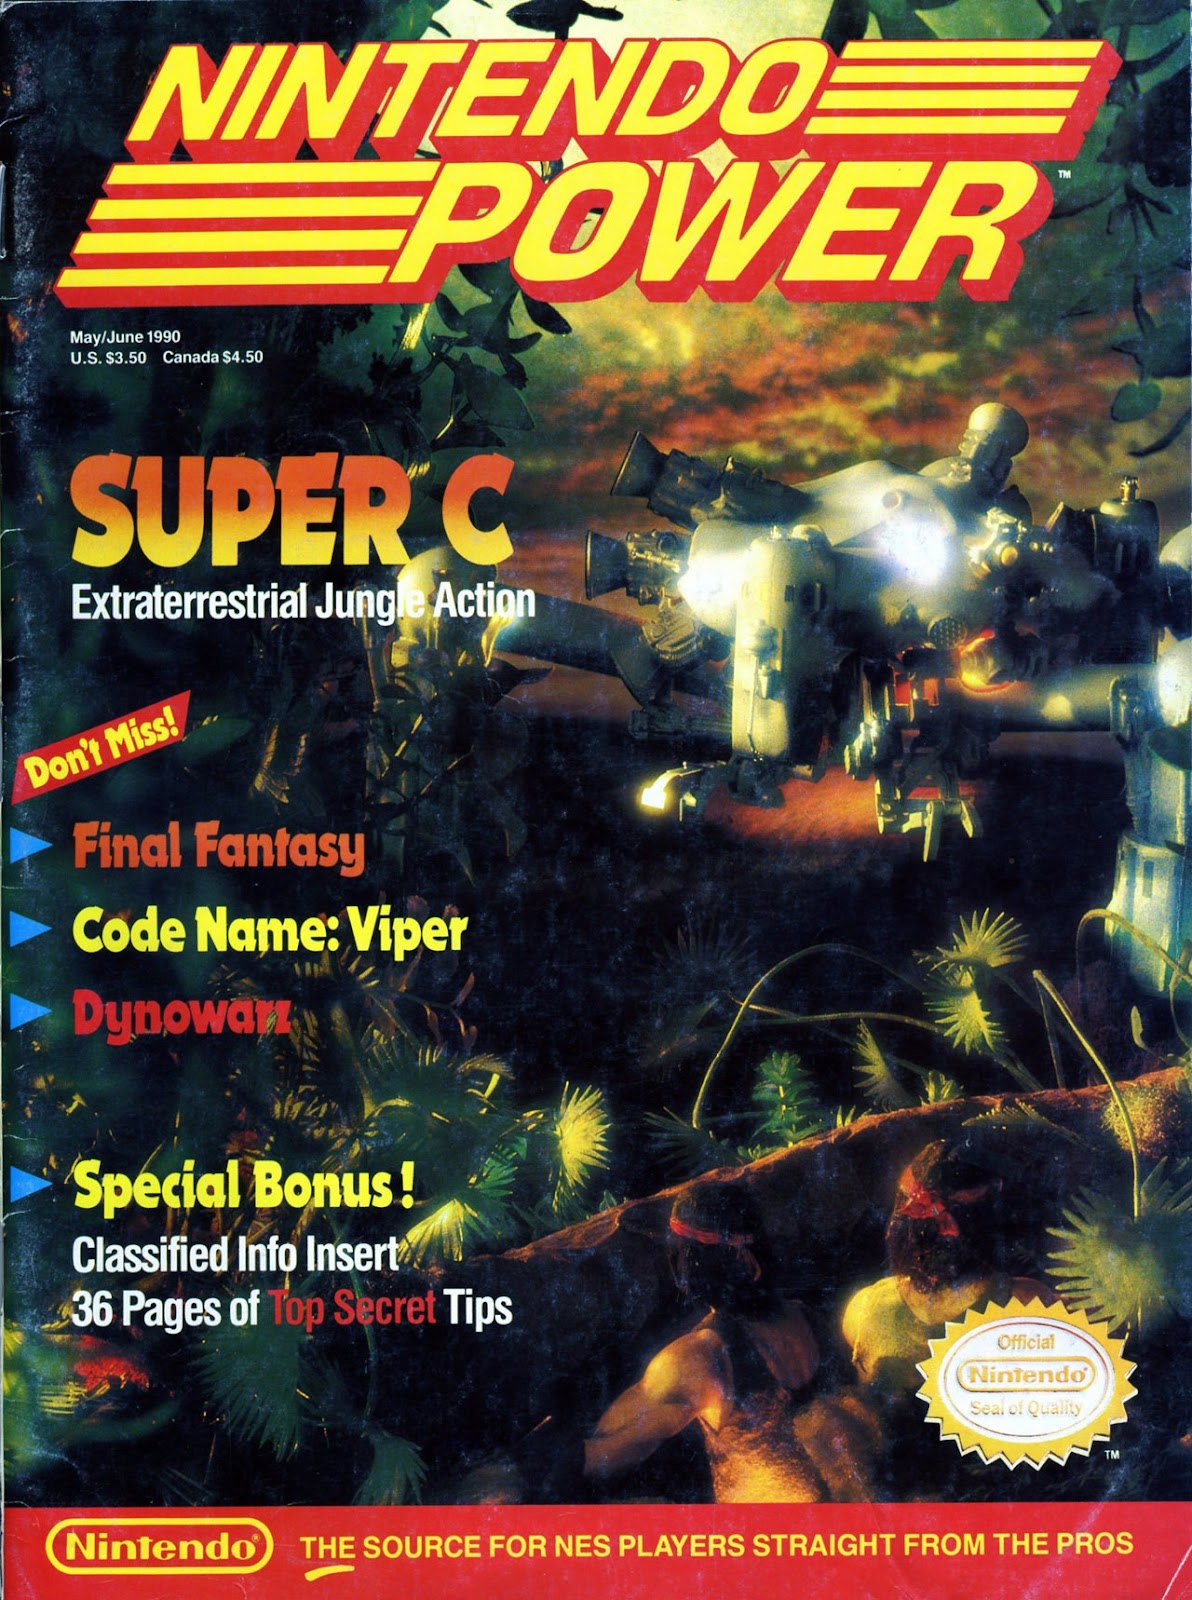 Nintendo power. Nintendo Power posters. Нинтендо 1990. Super c NES Cover.